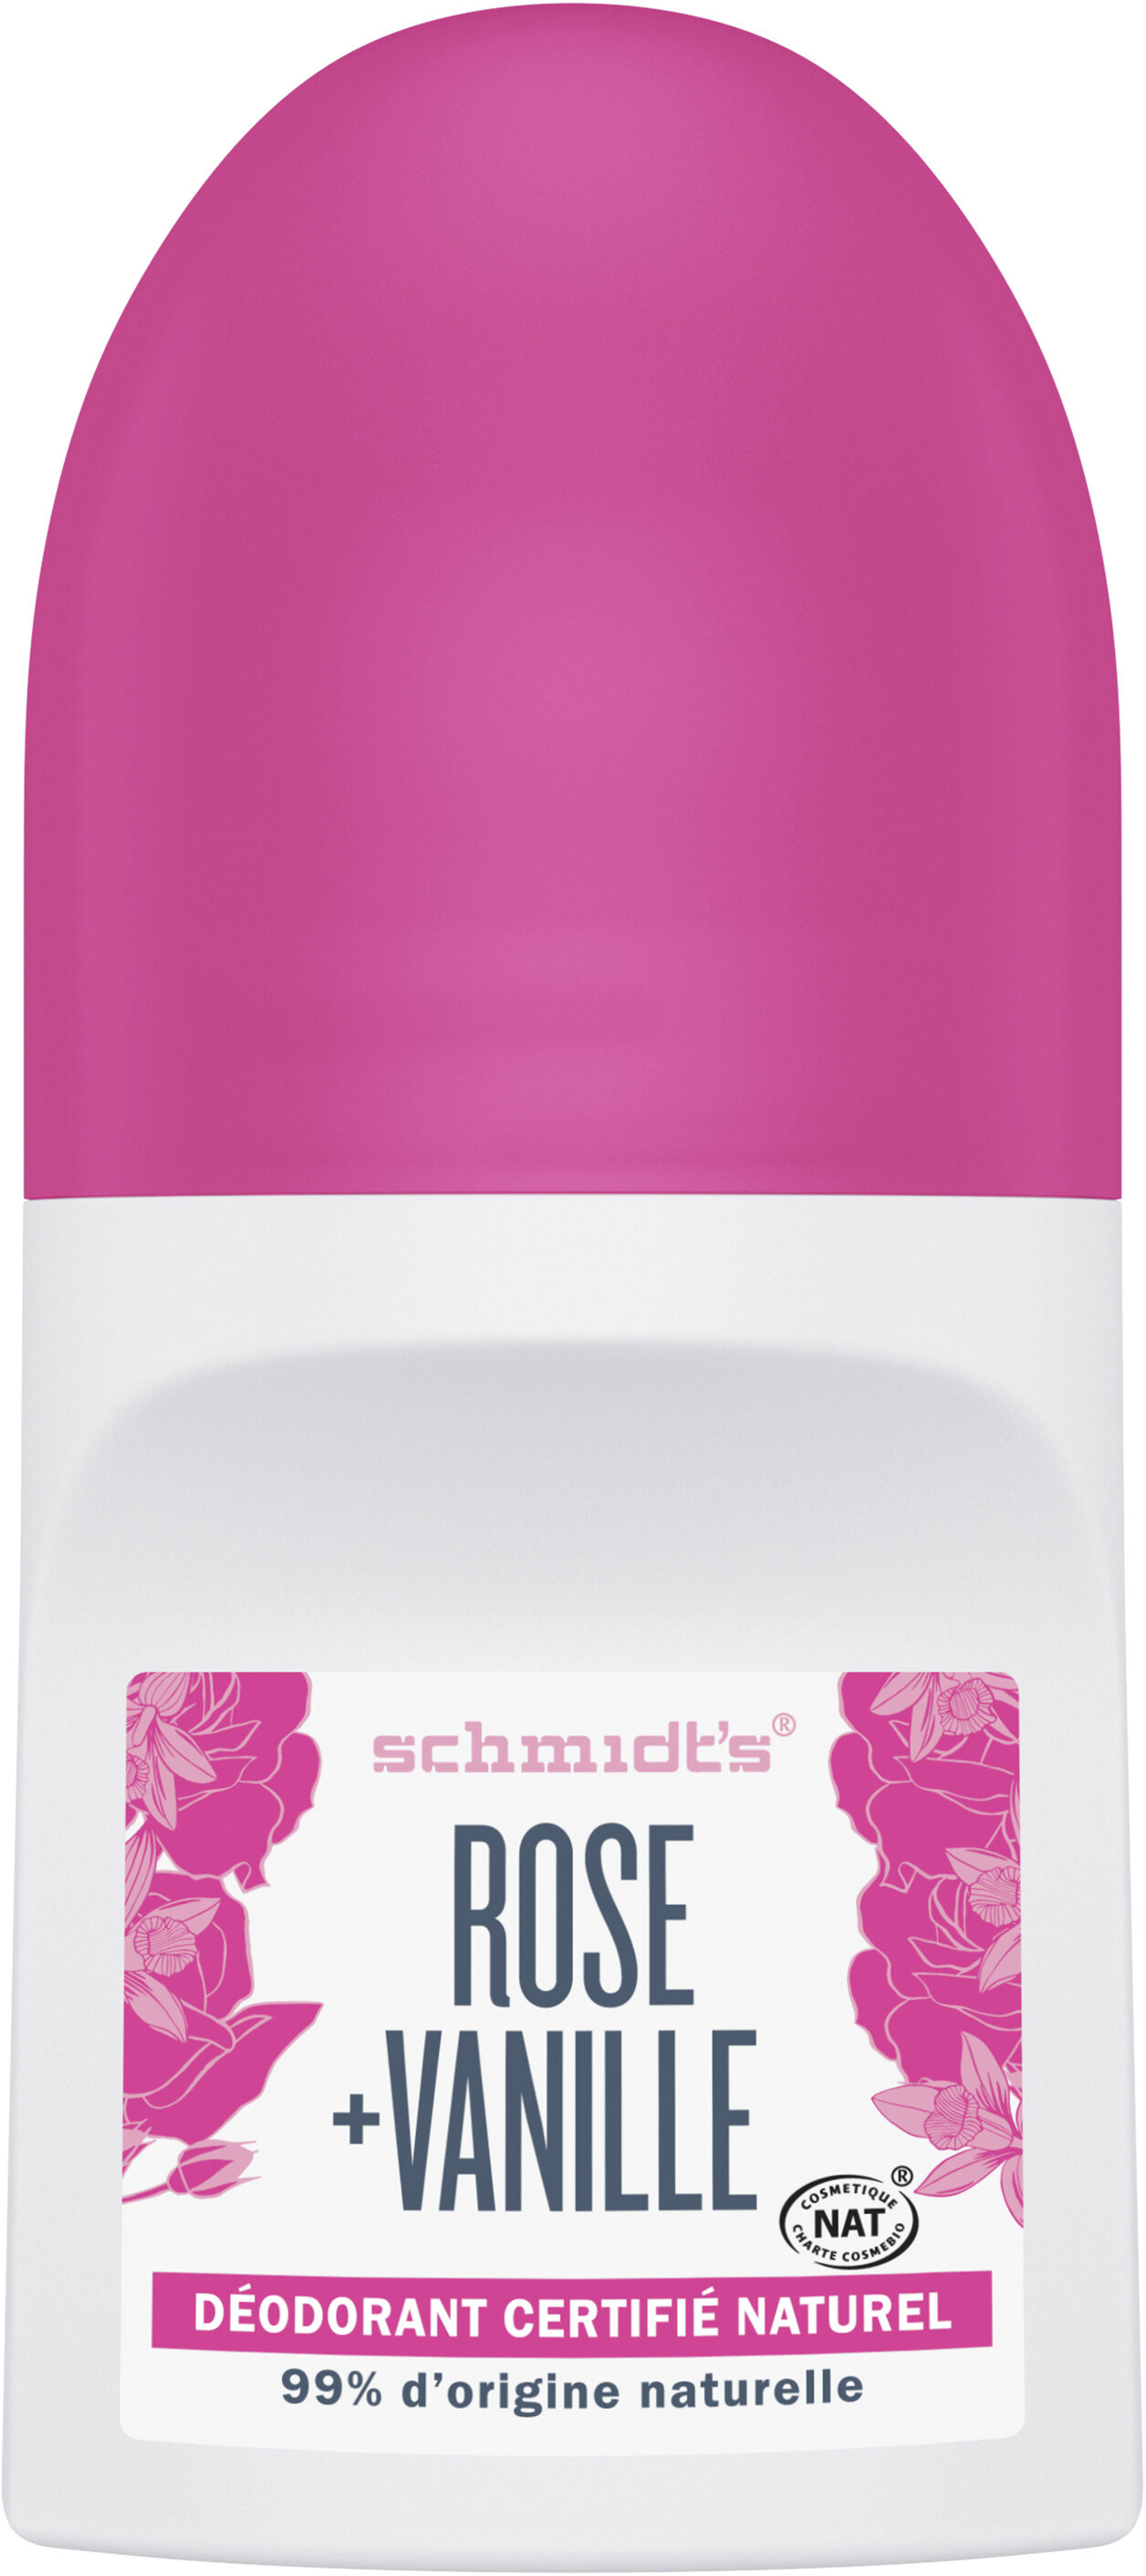 Schmidt's Déodorant Bille Rose + Vanille 50ml - Product - fr